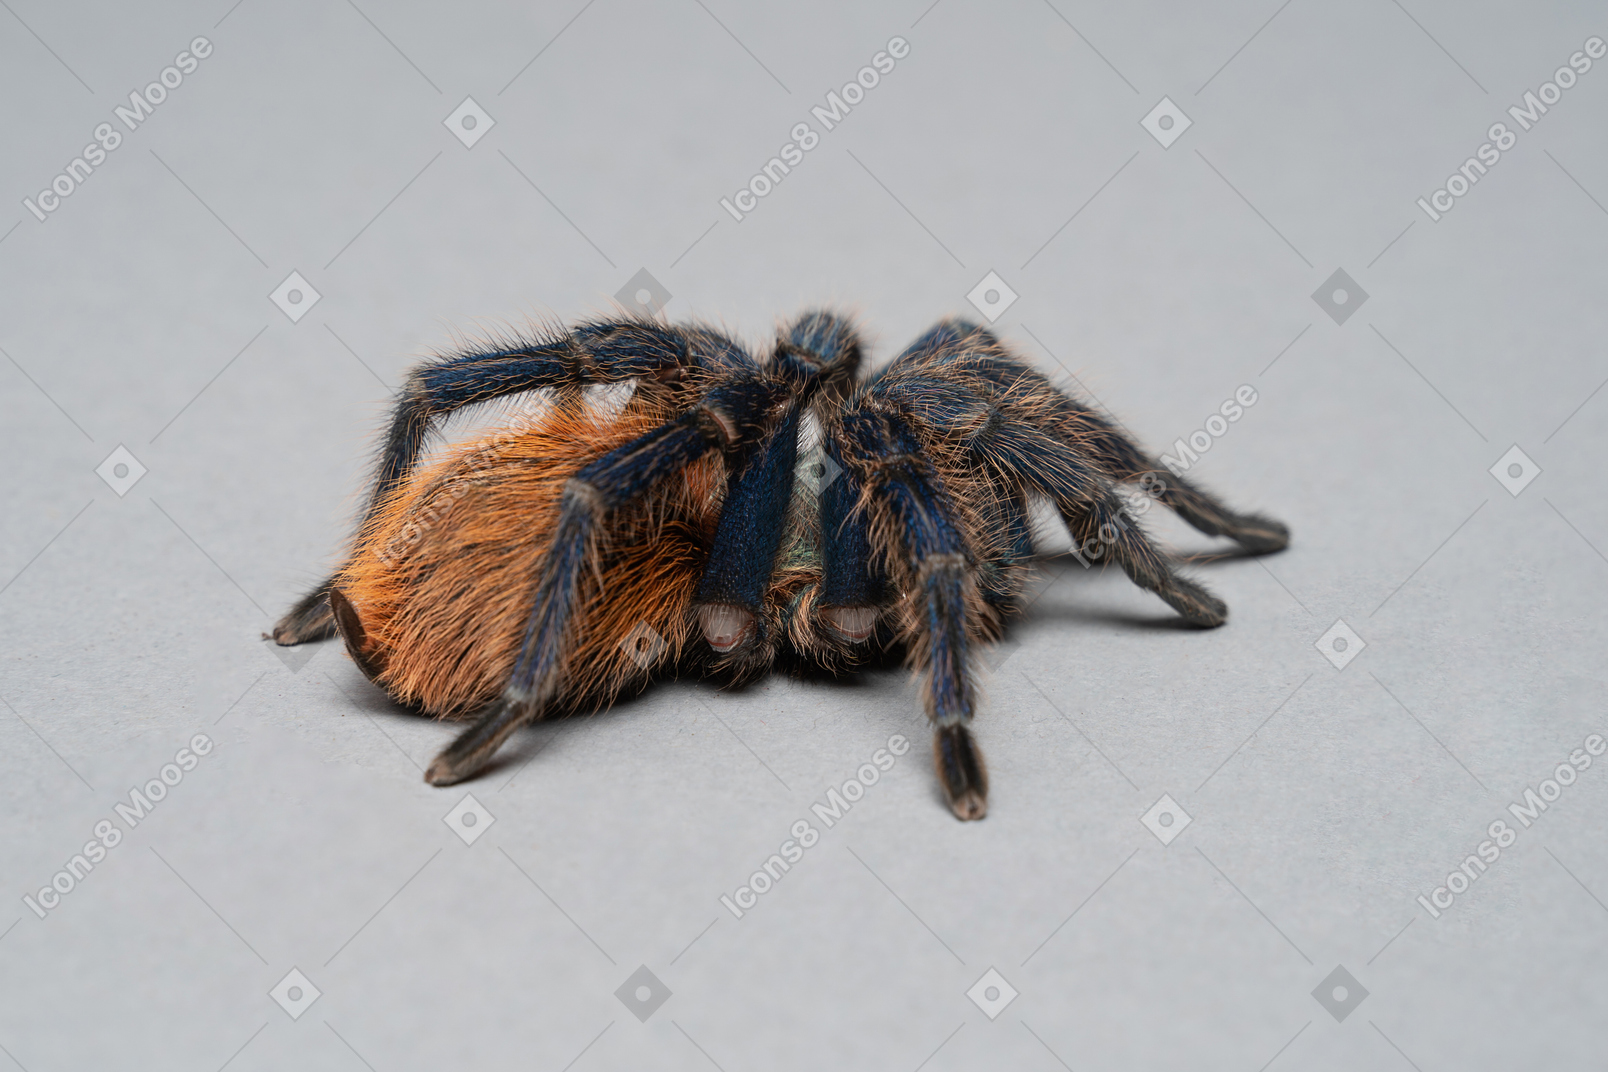 A hairy tarantula